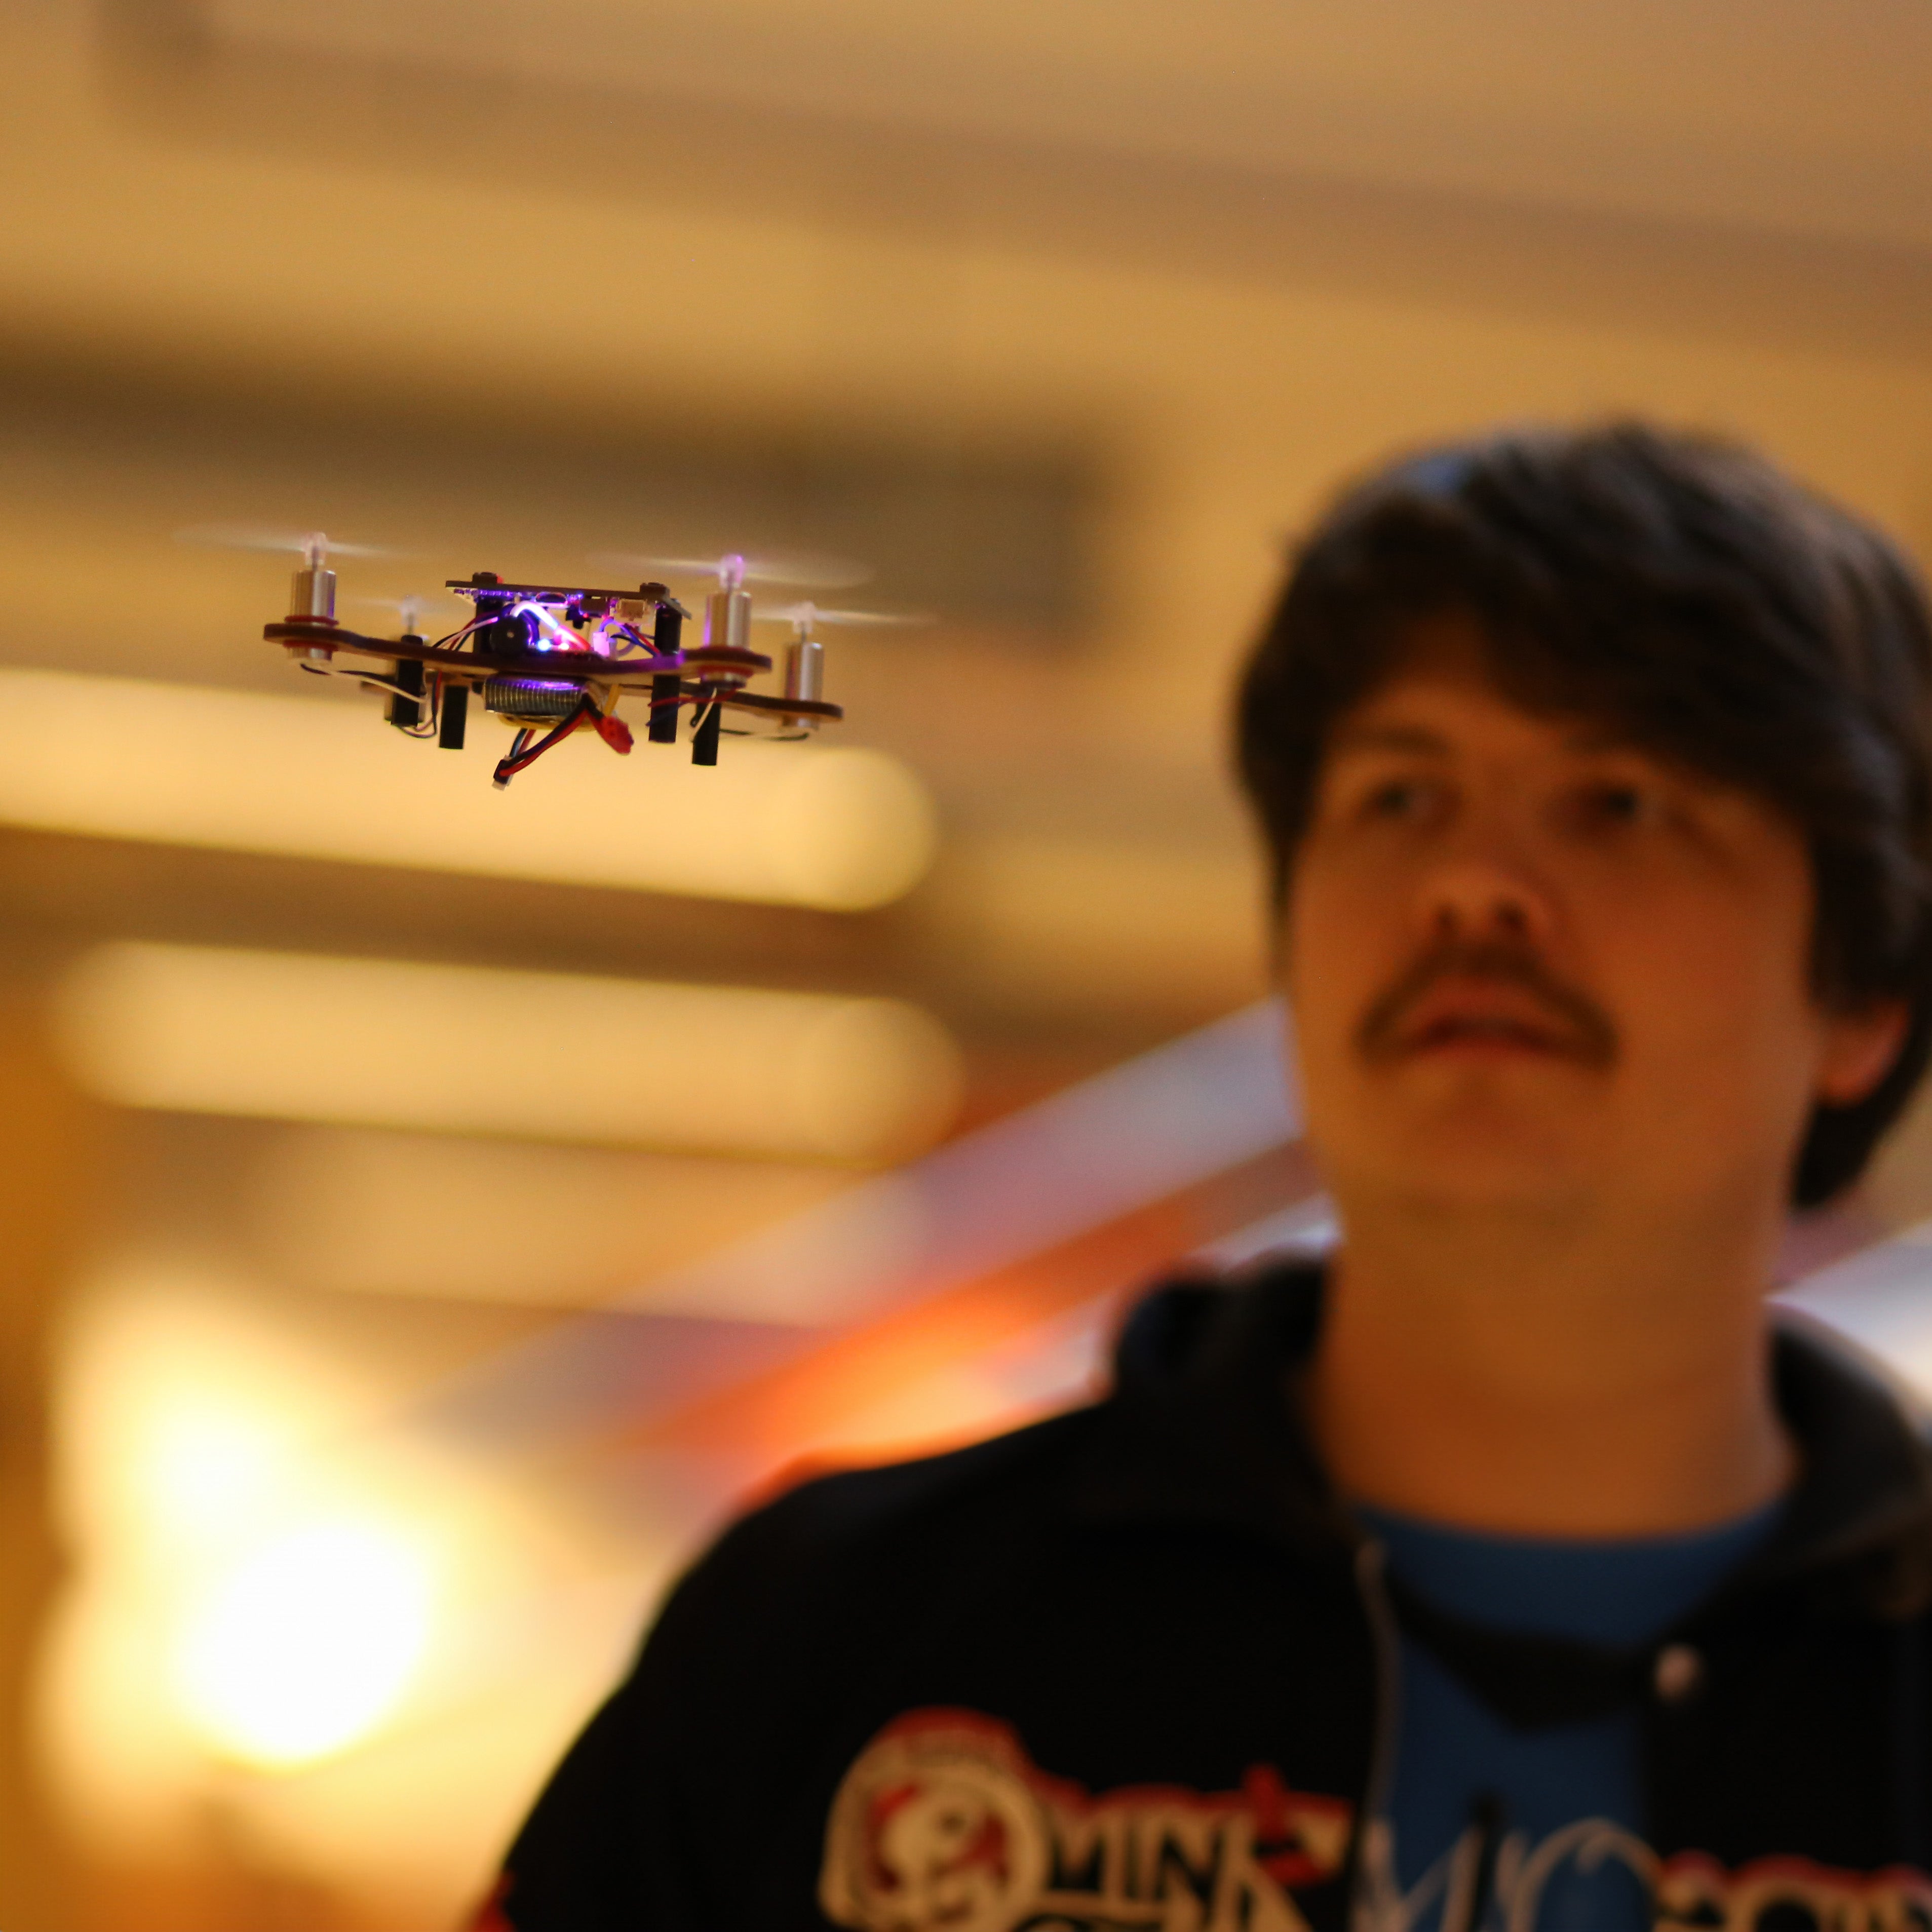 Air:bit 2 - DIY micro:bit drone